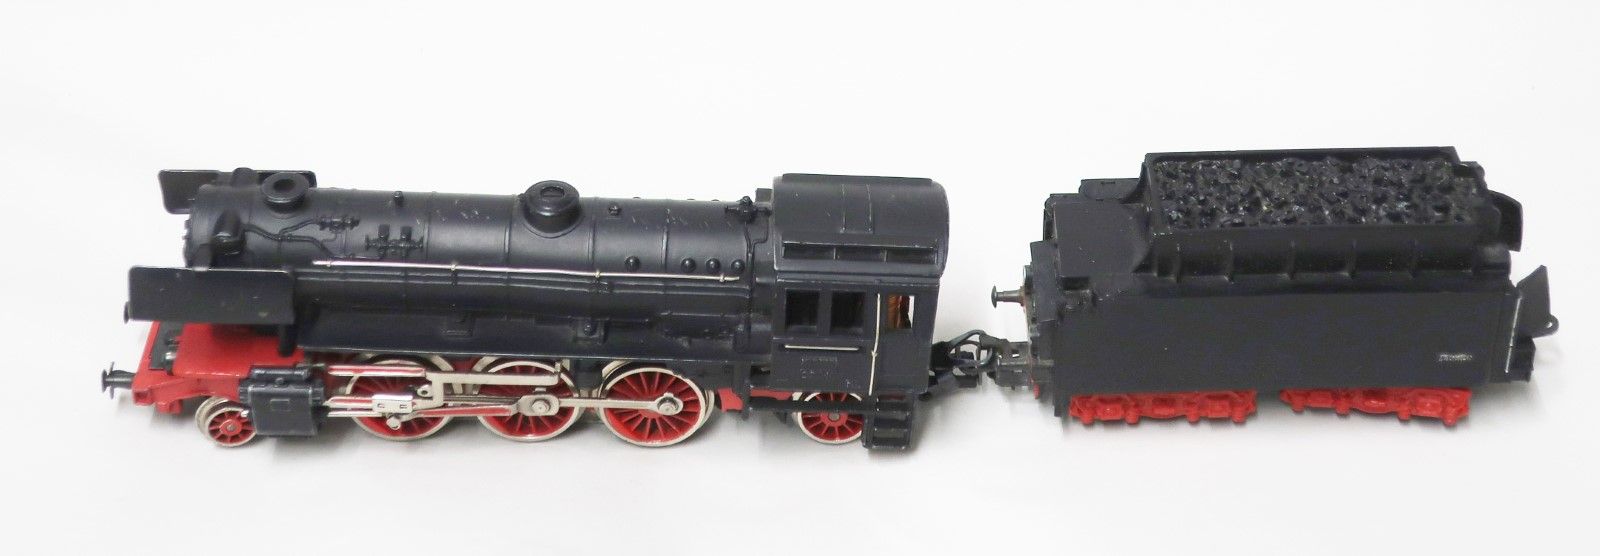 Null Locomotiva, probabilmente Märklin, n. 01097 (1958-3026), senza imballaggio